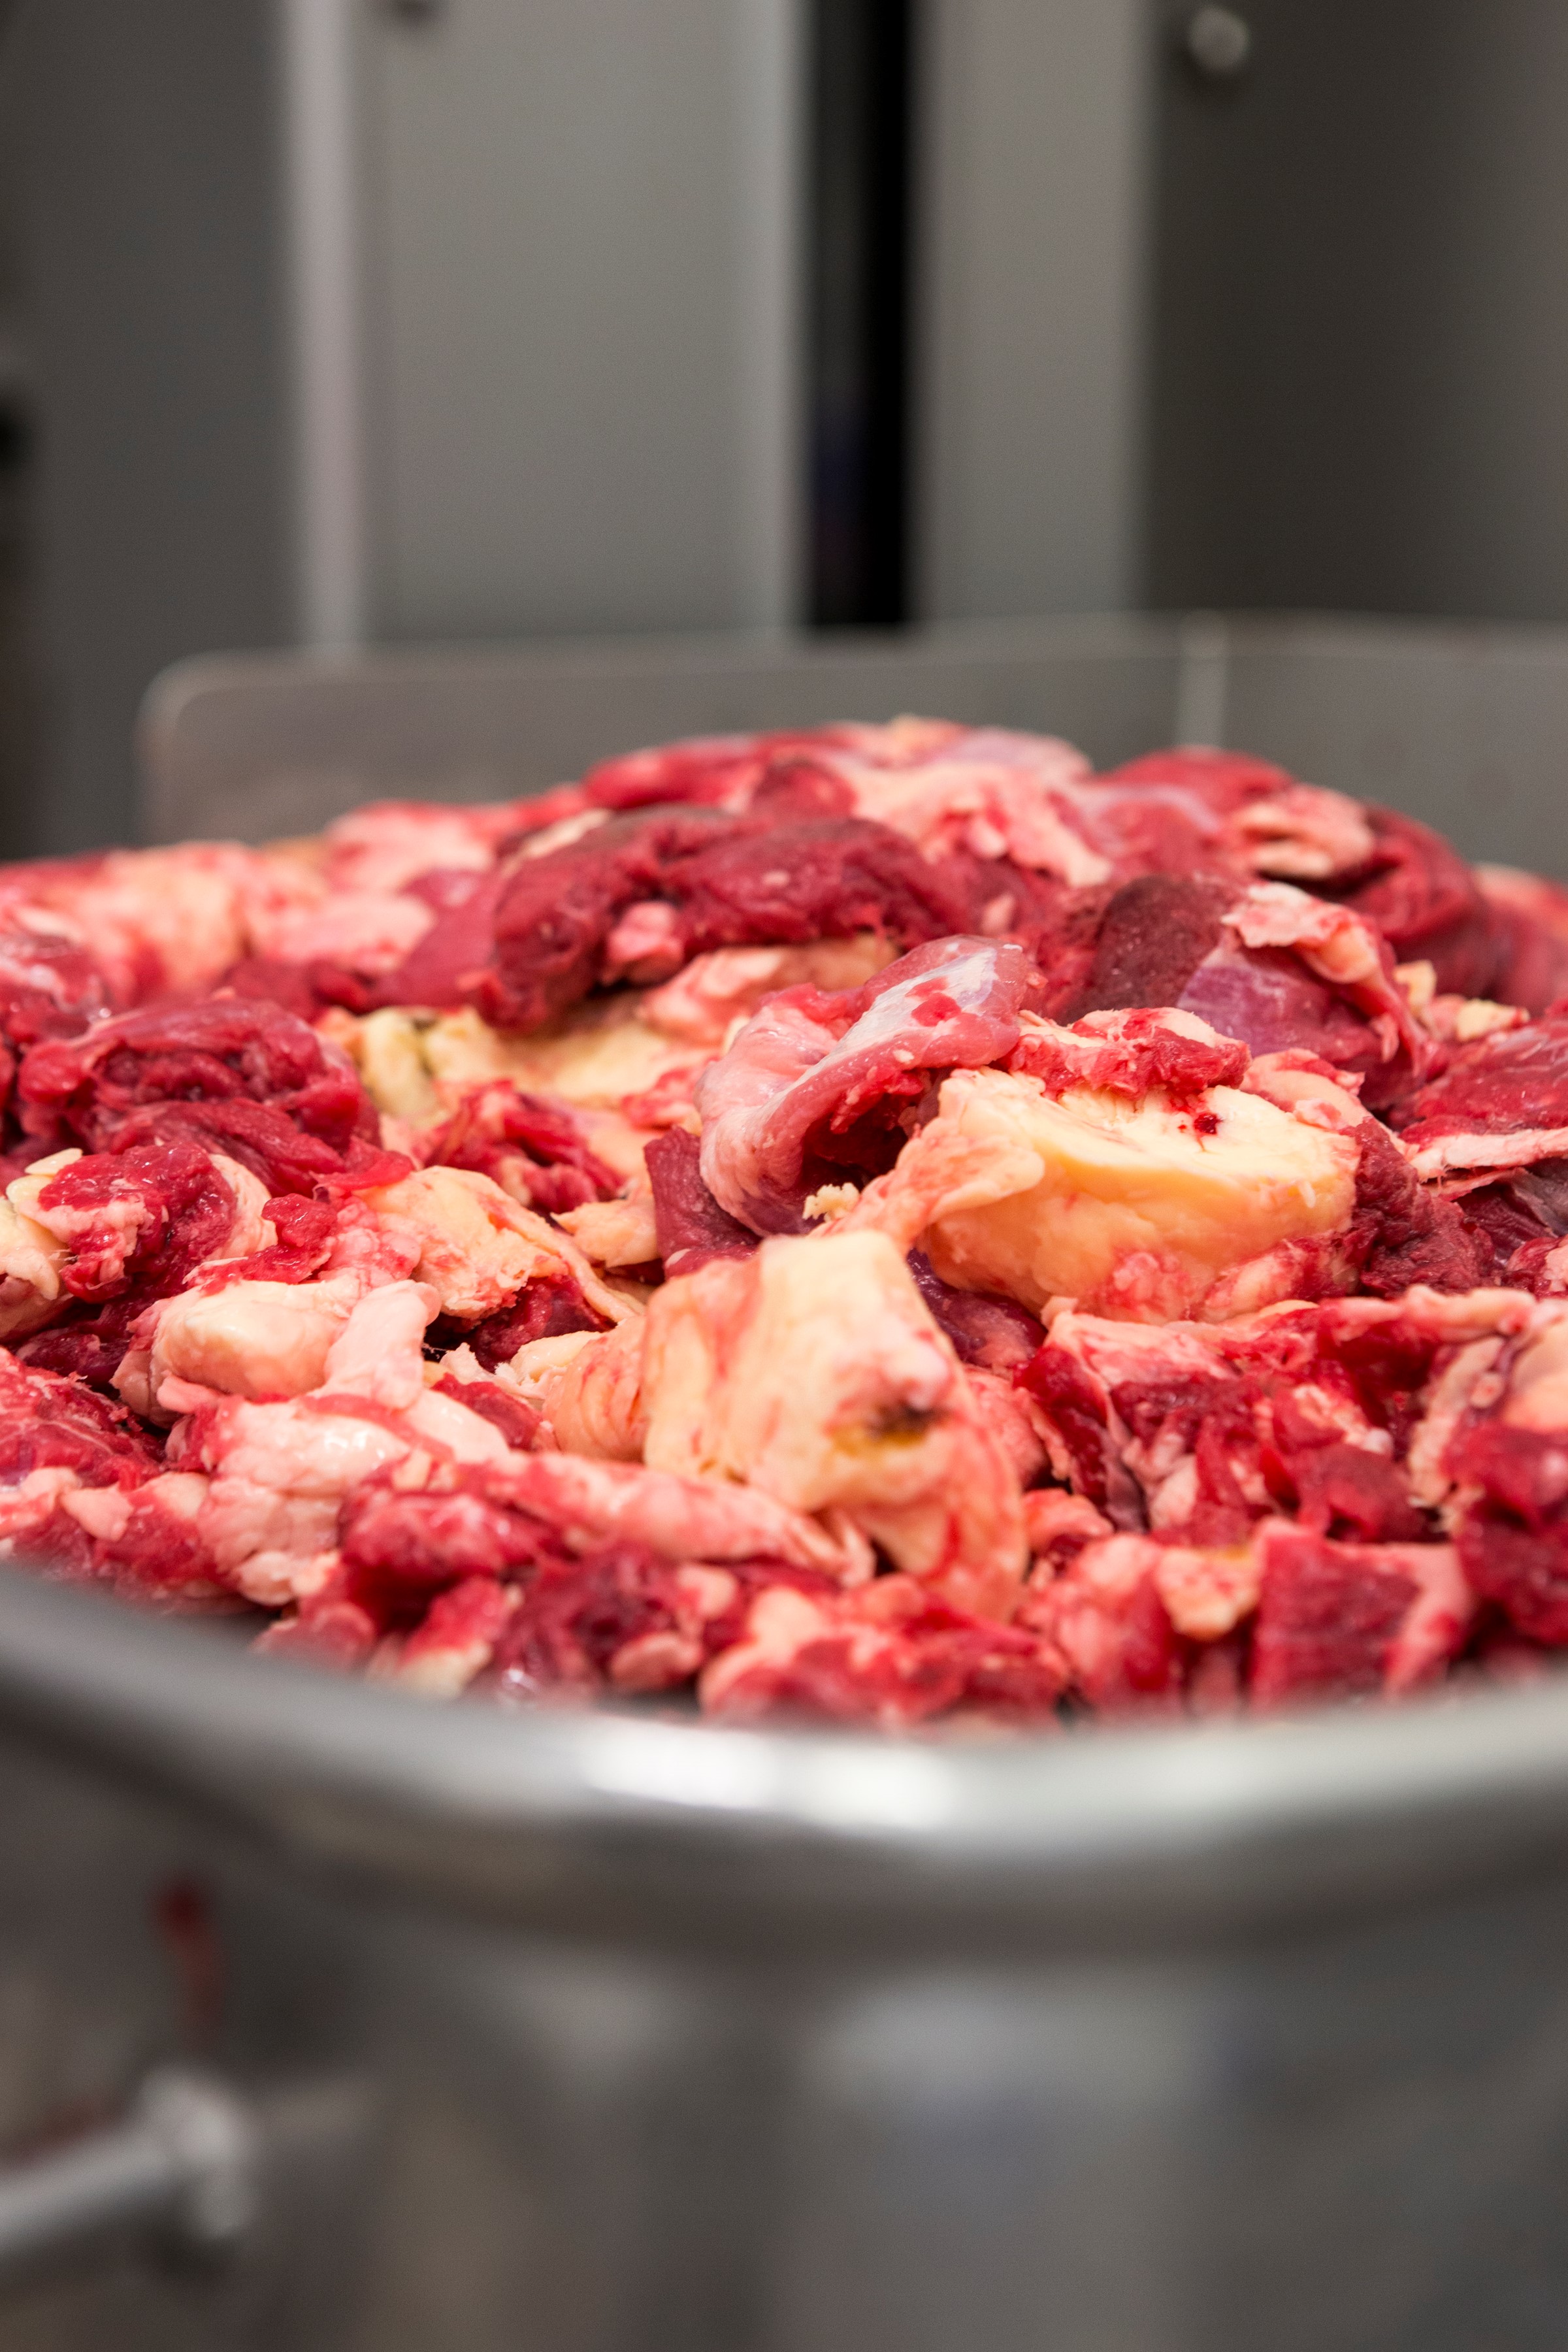 Meat Analysis - Pork